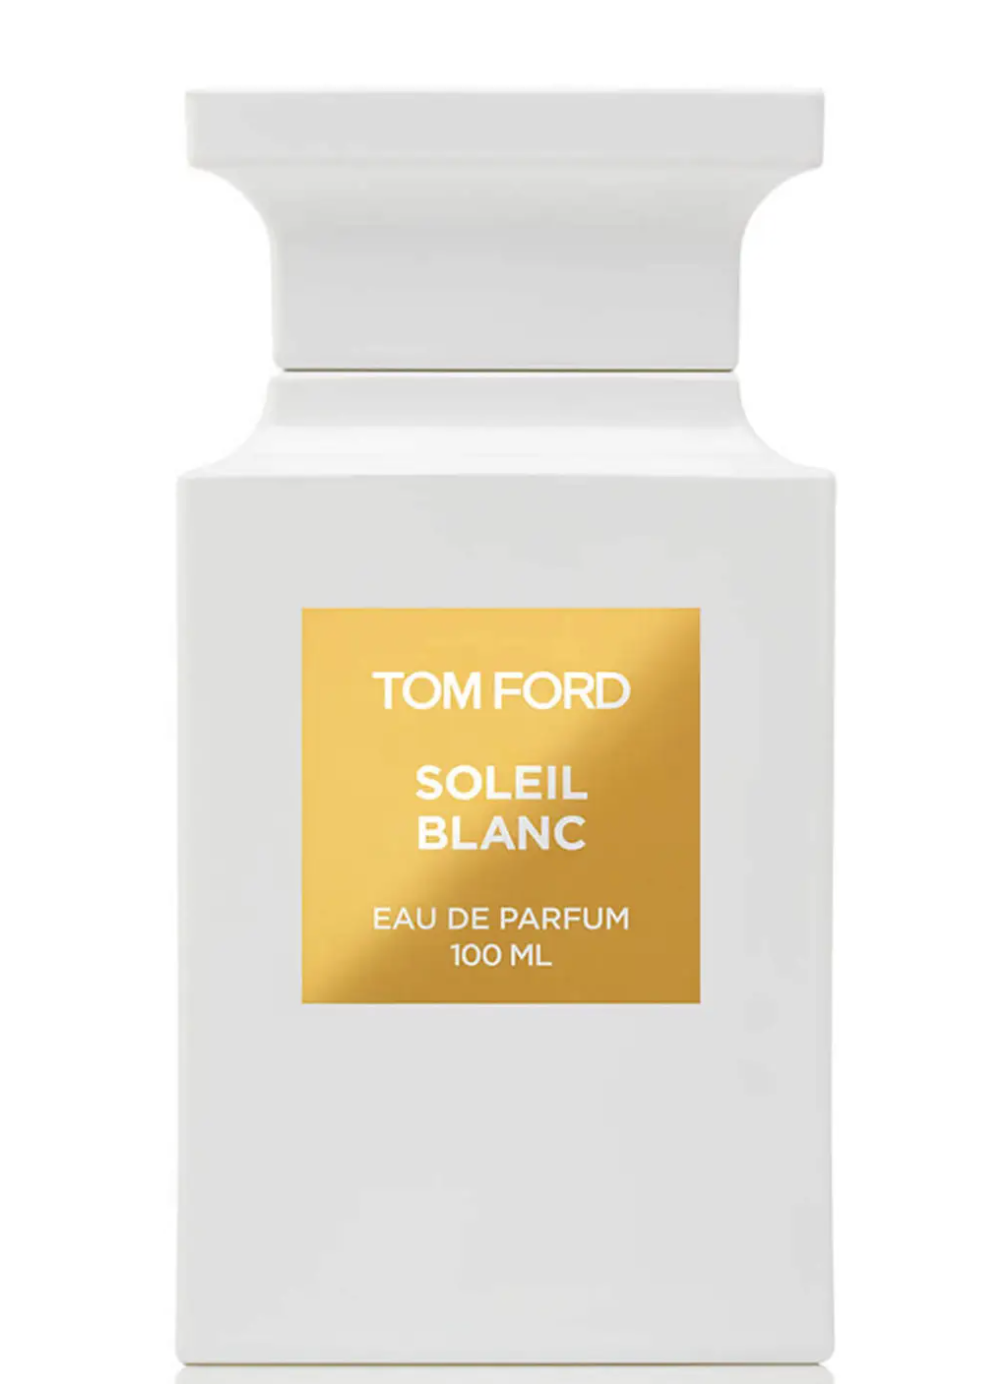 TOM FORD Soleil Blanc Eau de Parfum